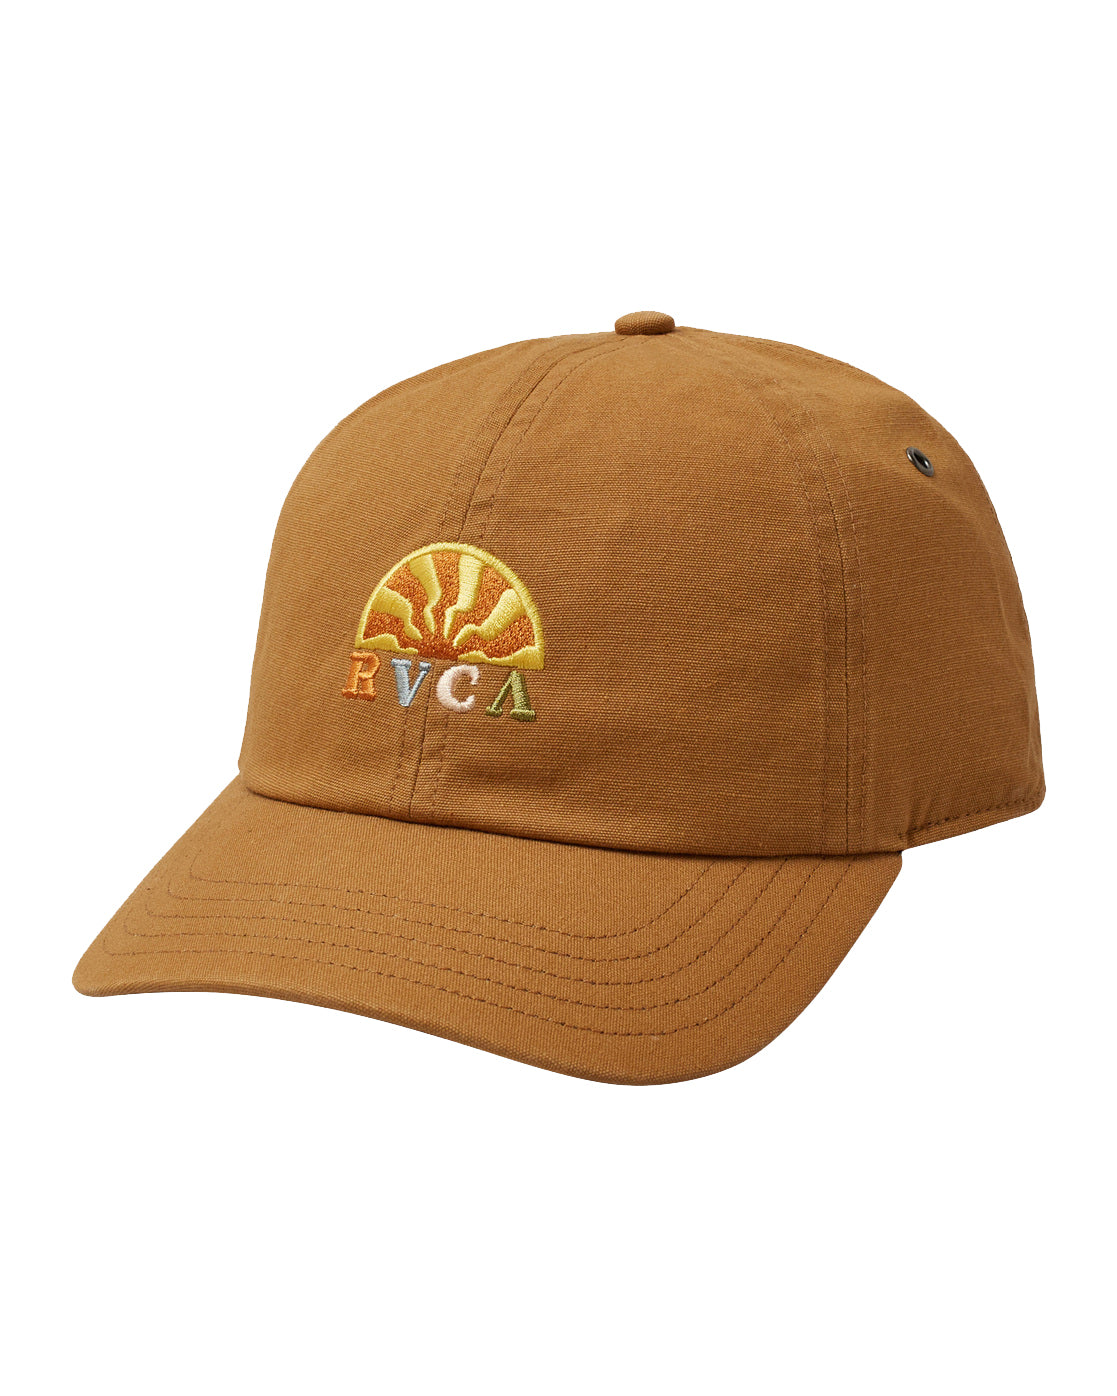 RVCA Rays Dad Hat